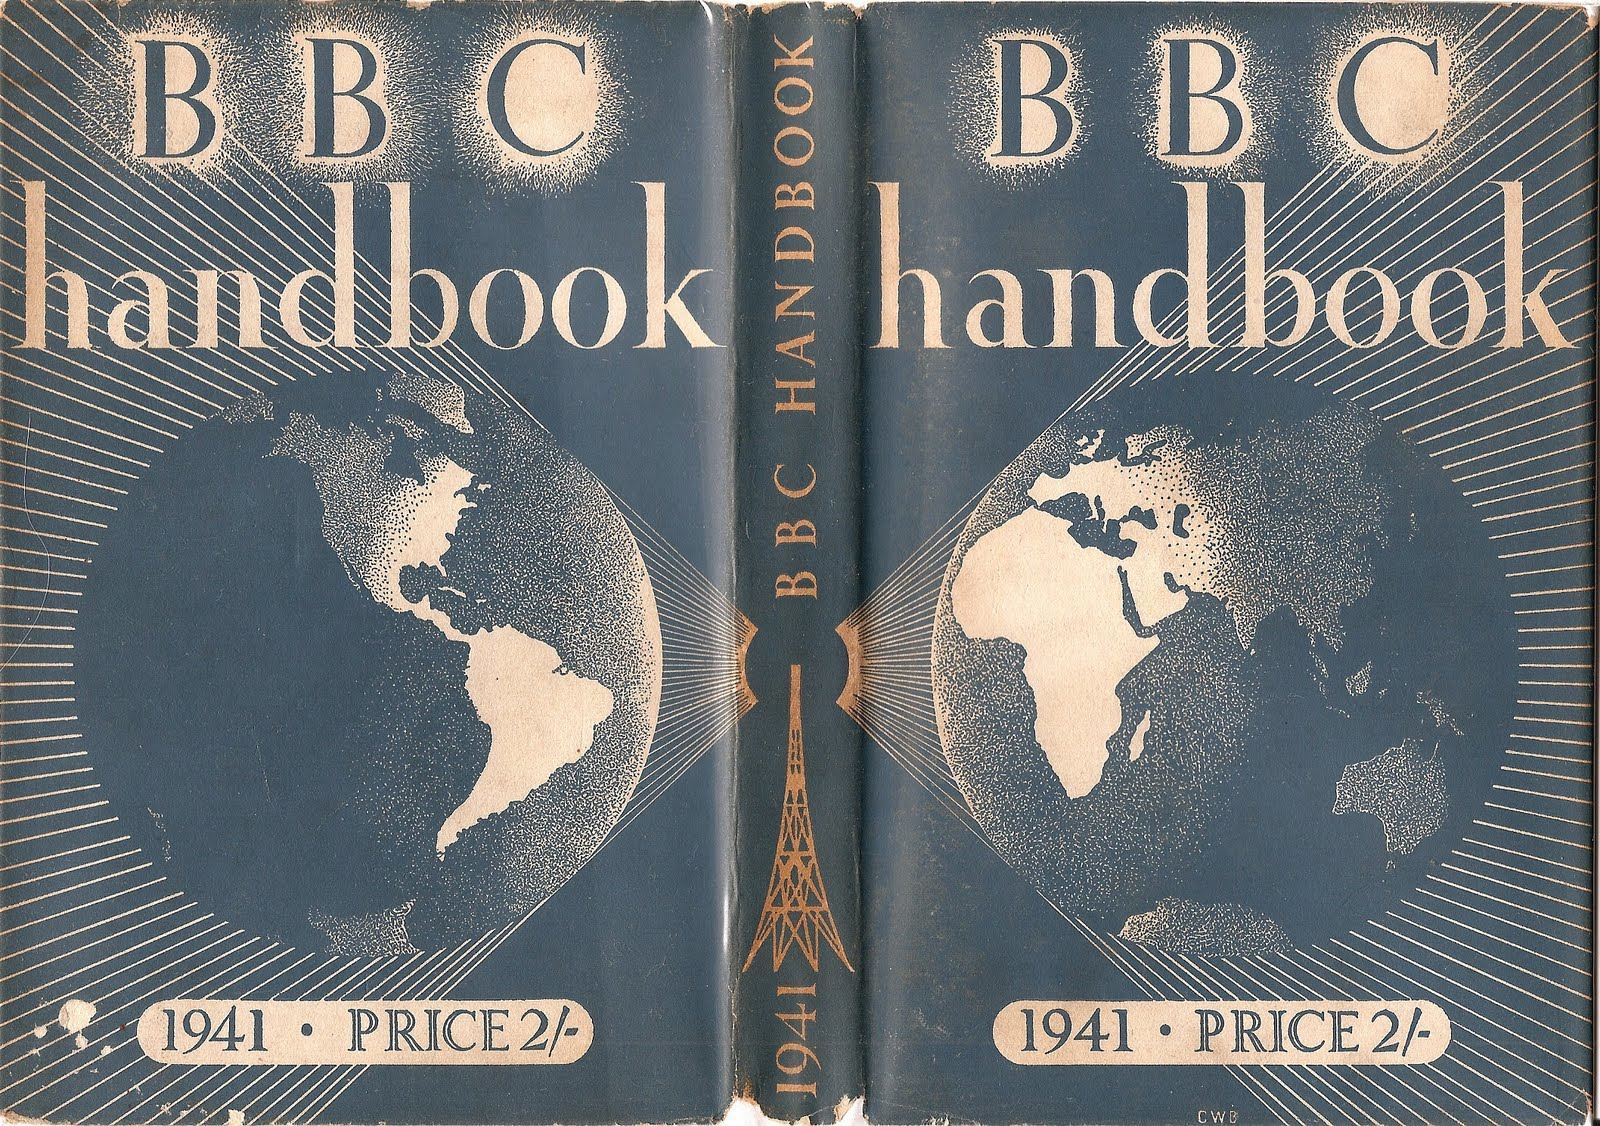 BBC Handbook 1941 Jacket